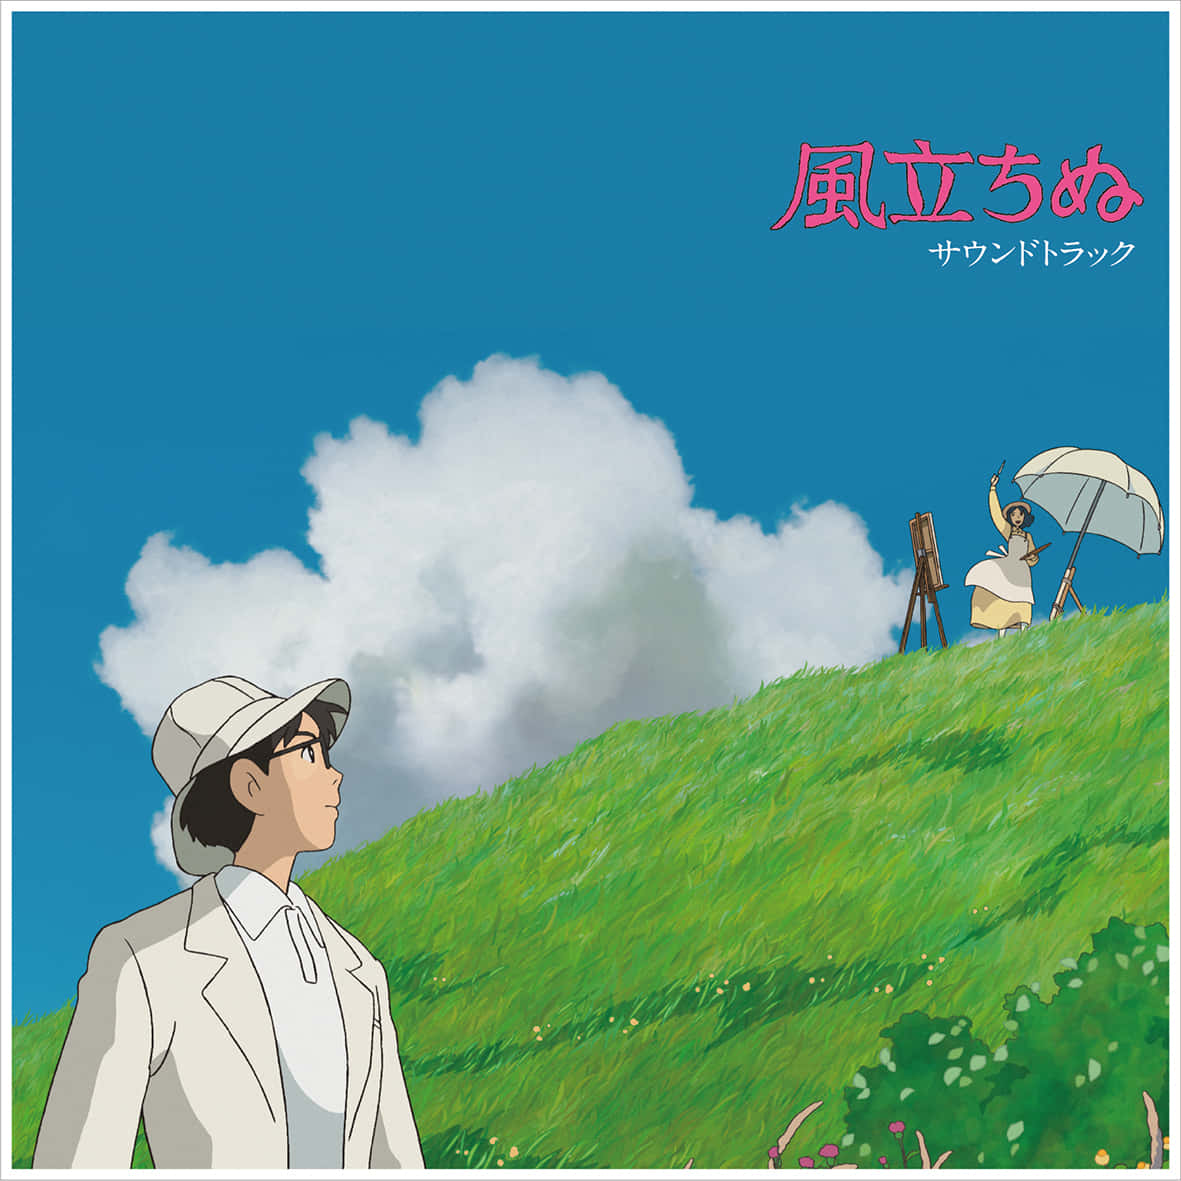 Japanese Director Hayao Miyazaki Brings His Vision of Dreams to Life in The Wind Rises Wallpaper